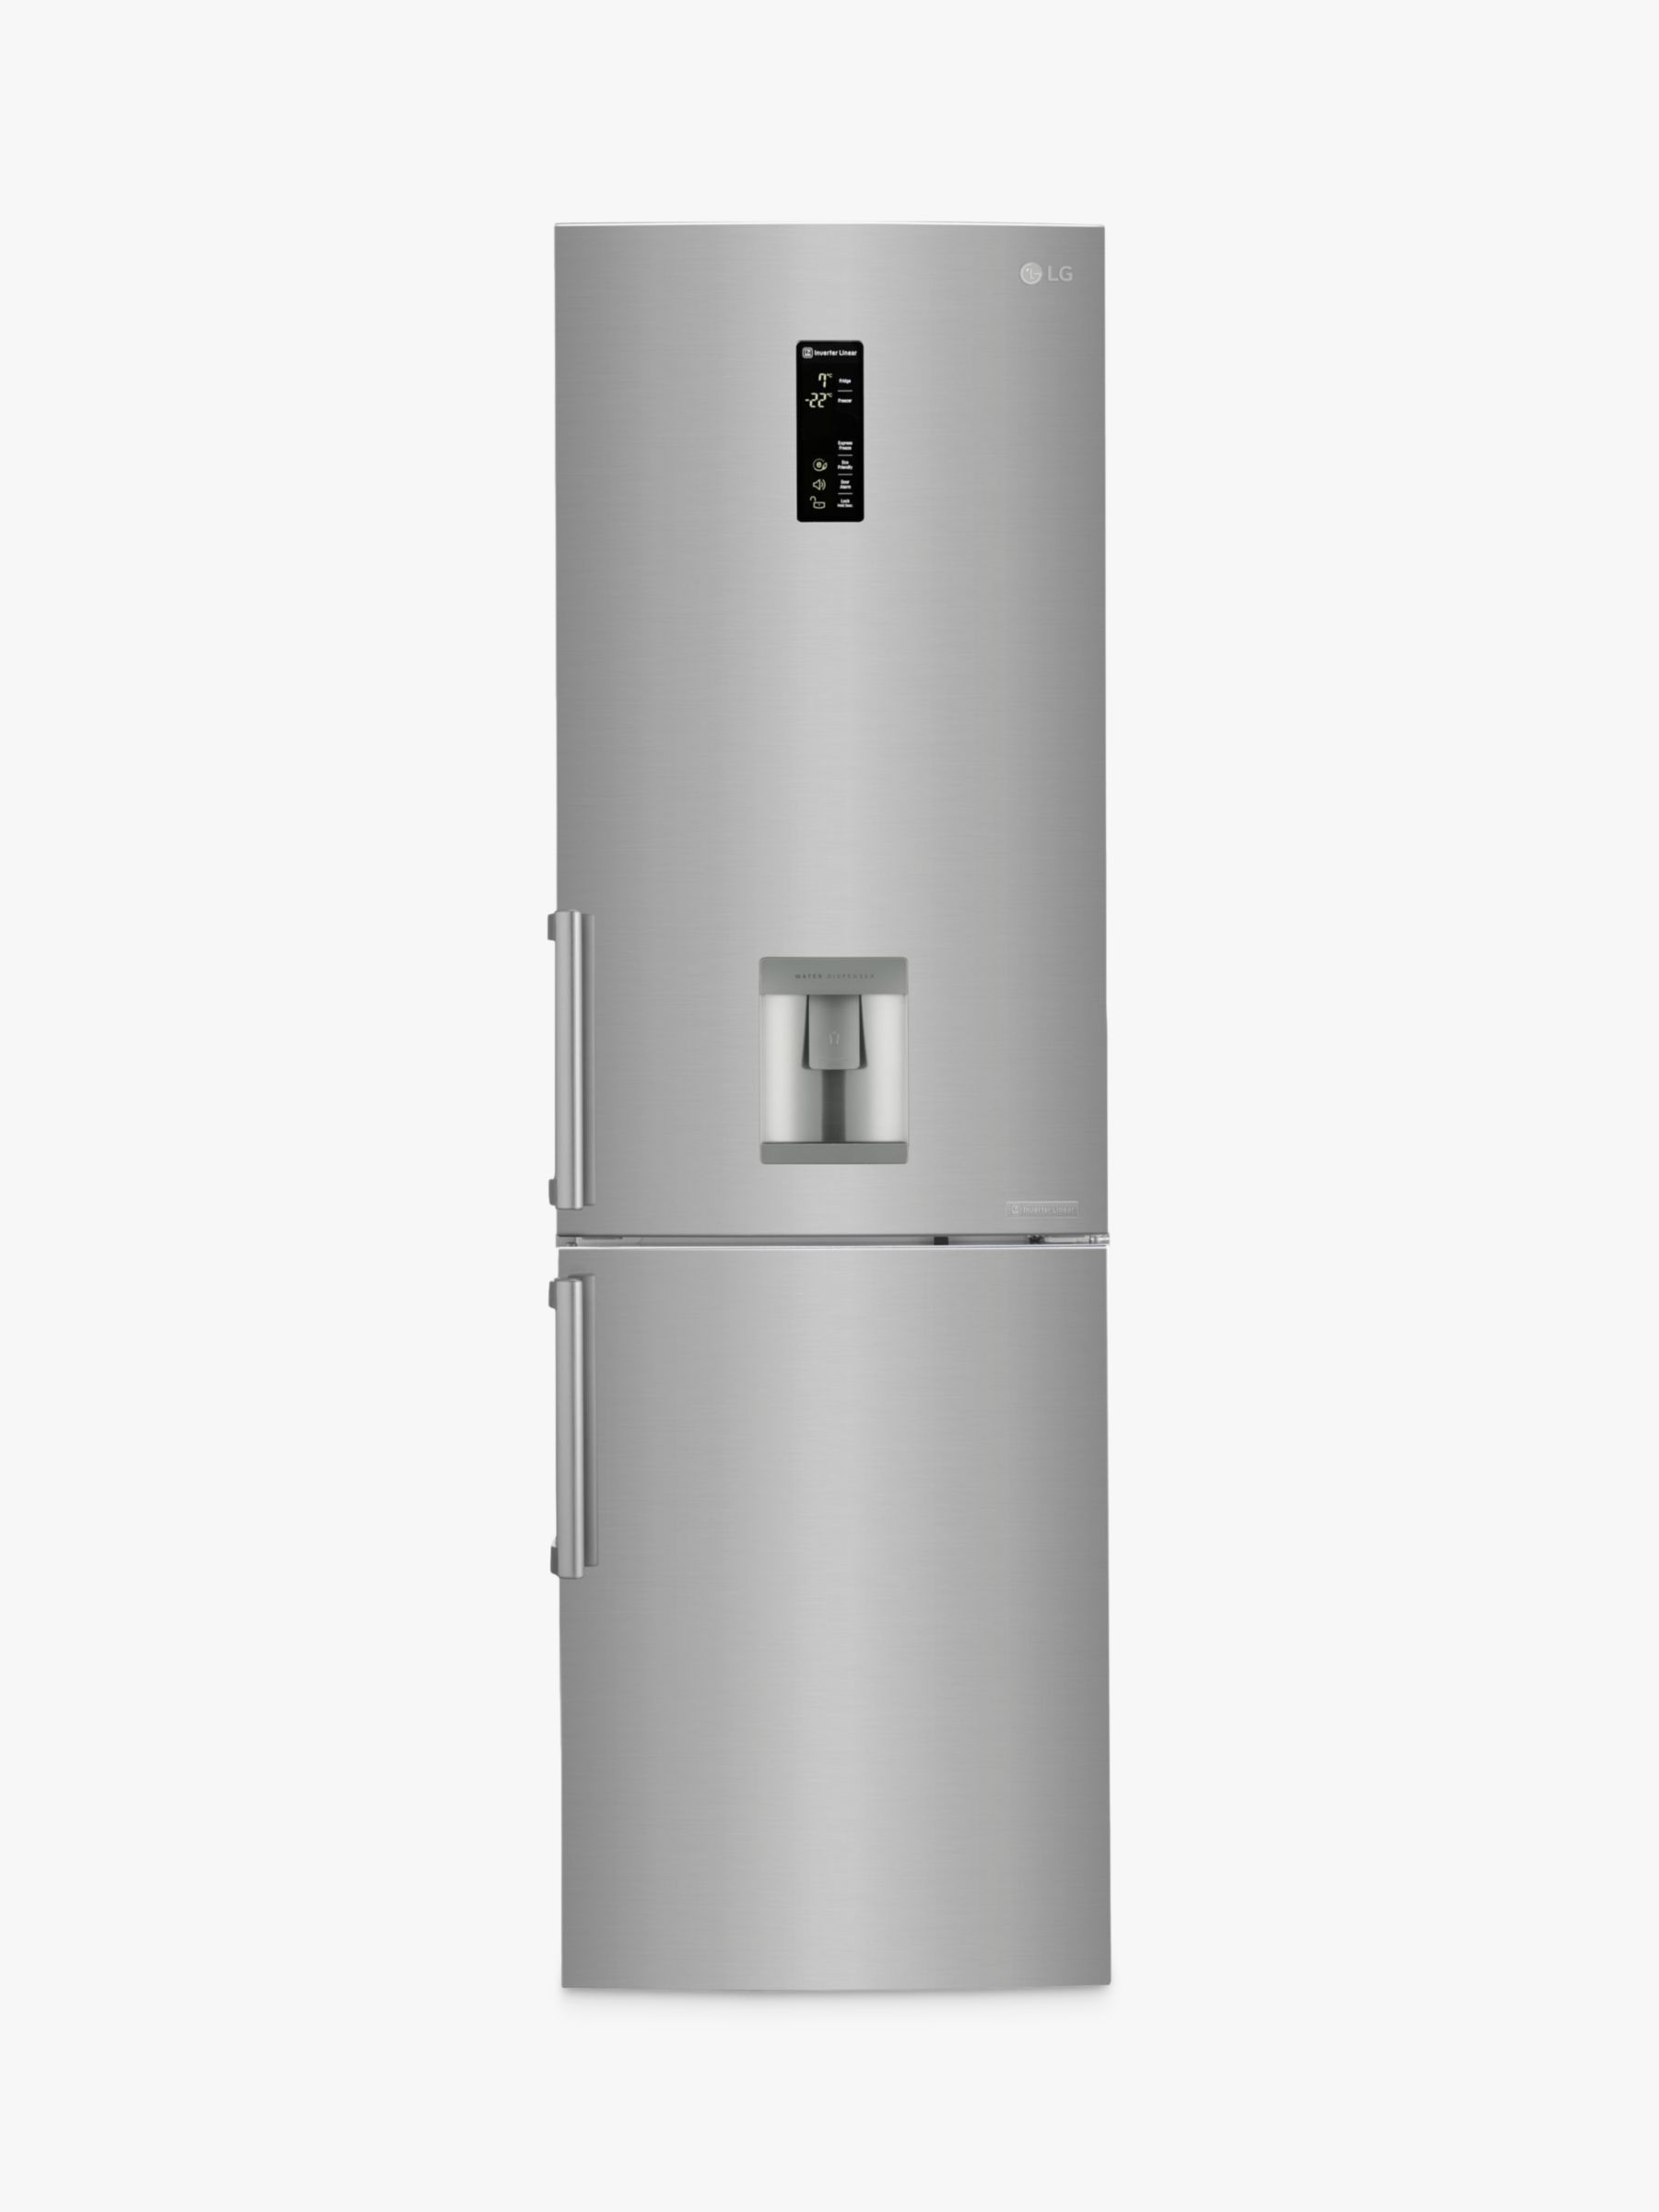 LG GBF59PZKZB Freestanding Fridge Freezer, A++ Energy rating, 60cm Wide, Premium Steel